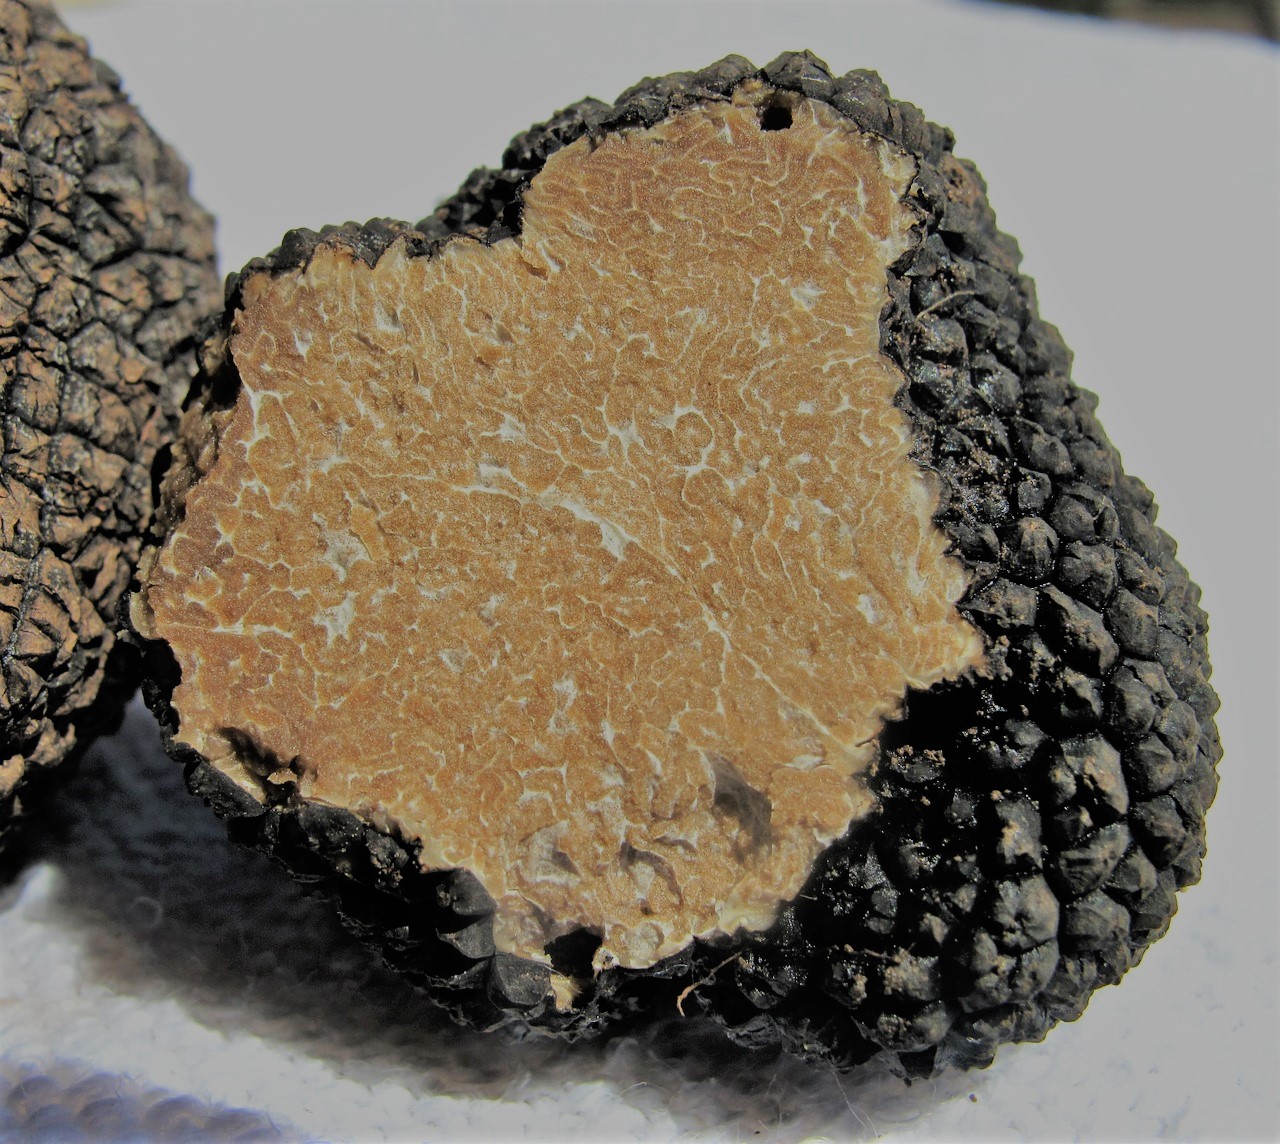 Black Istrian truffle